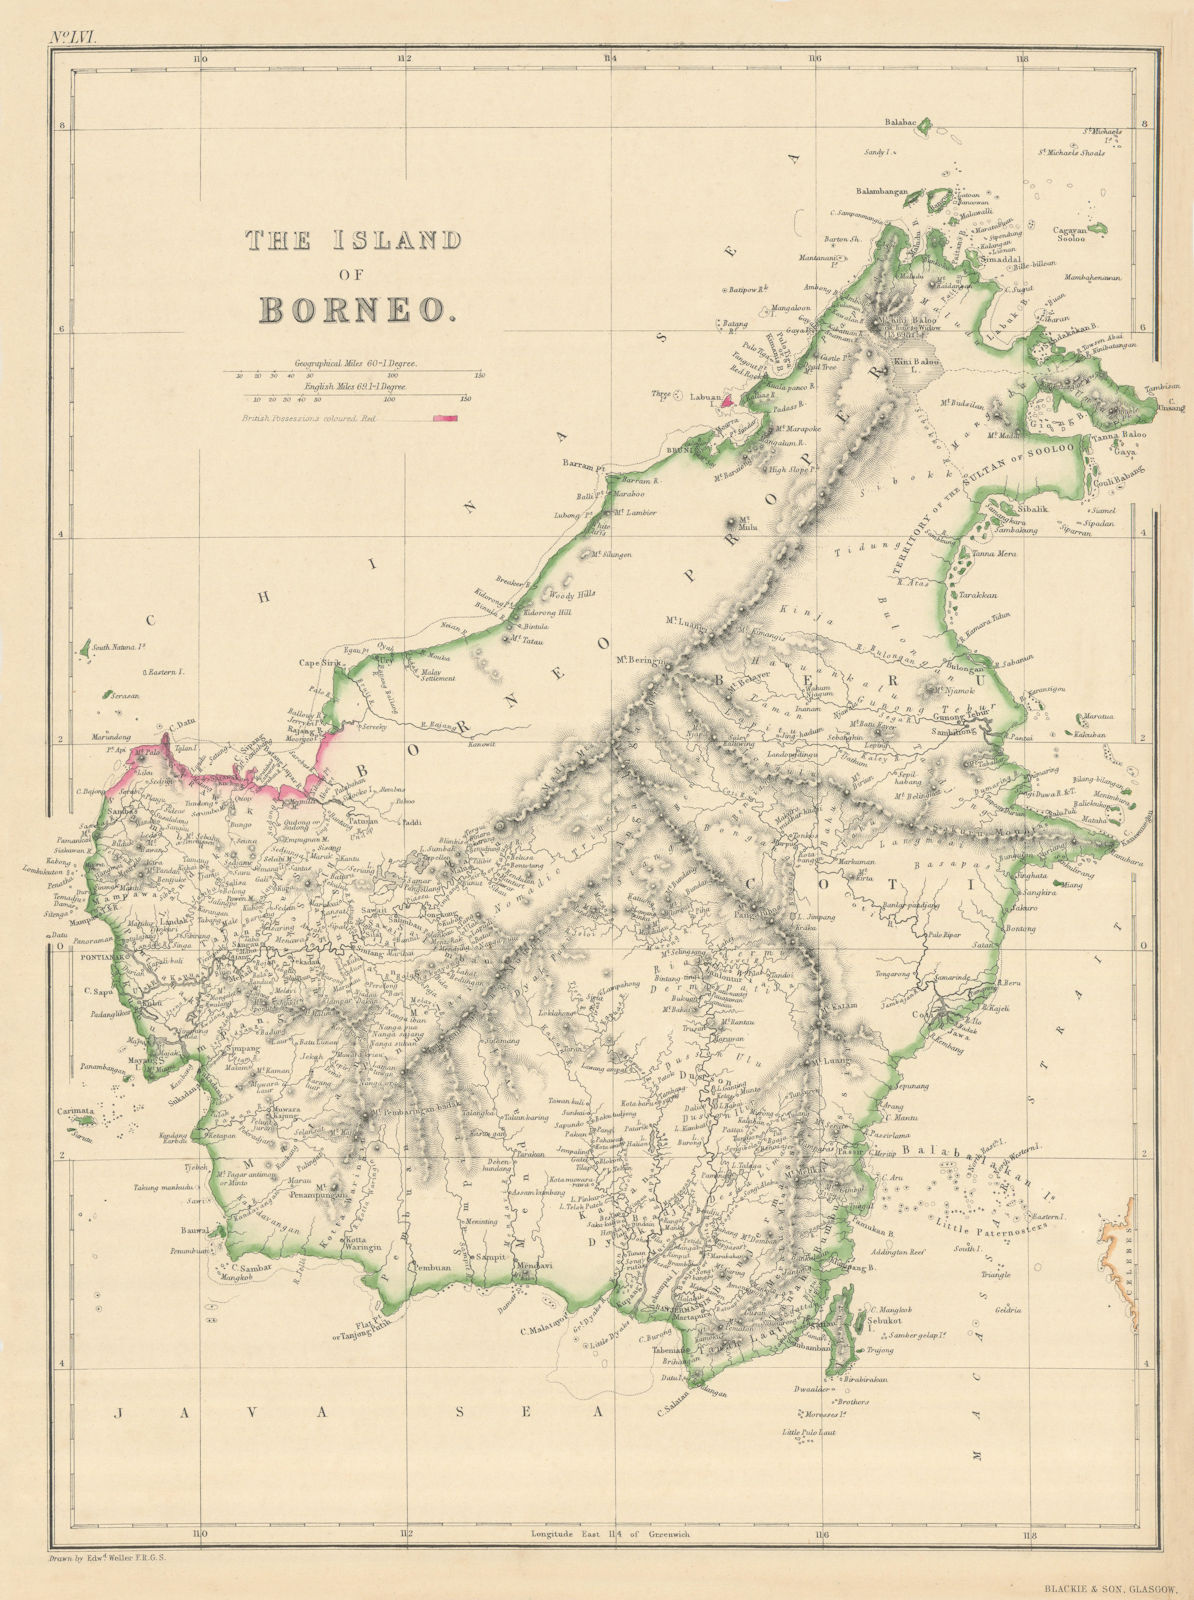 Associate Product The Island of Borneo by Edward Weller. Sarawak Sabah Brunei Kalimantan 1860 map